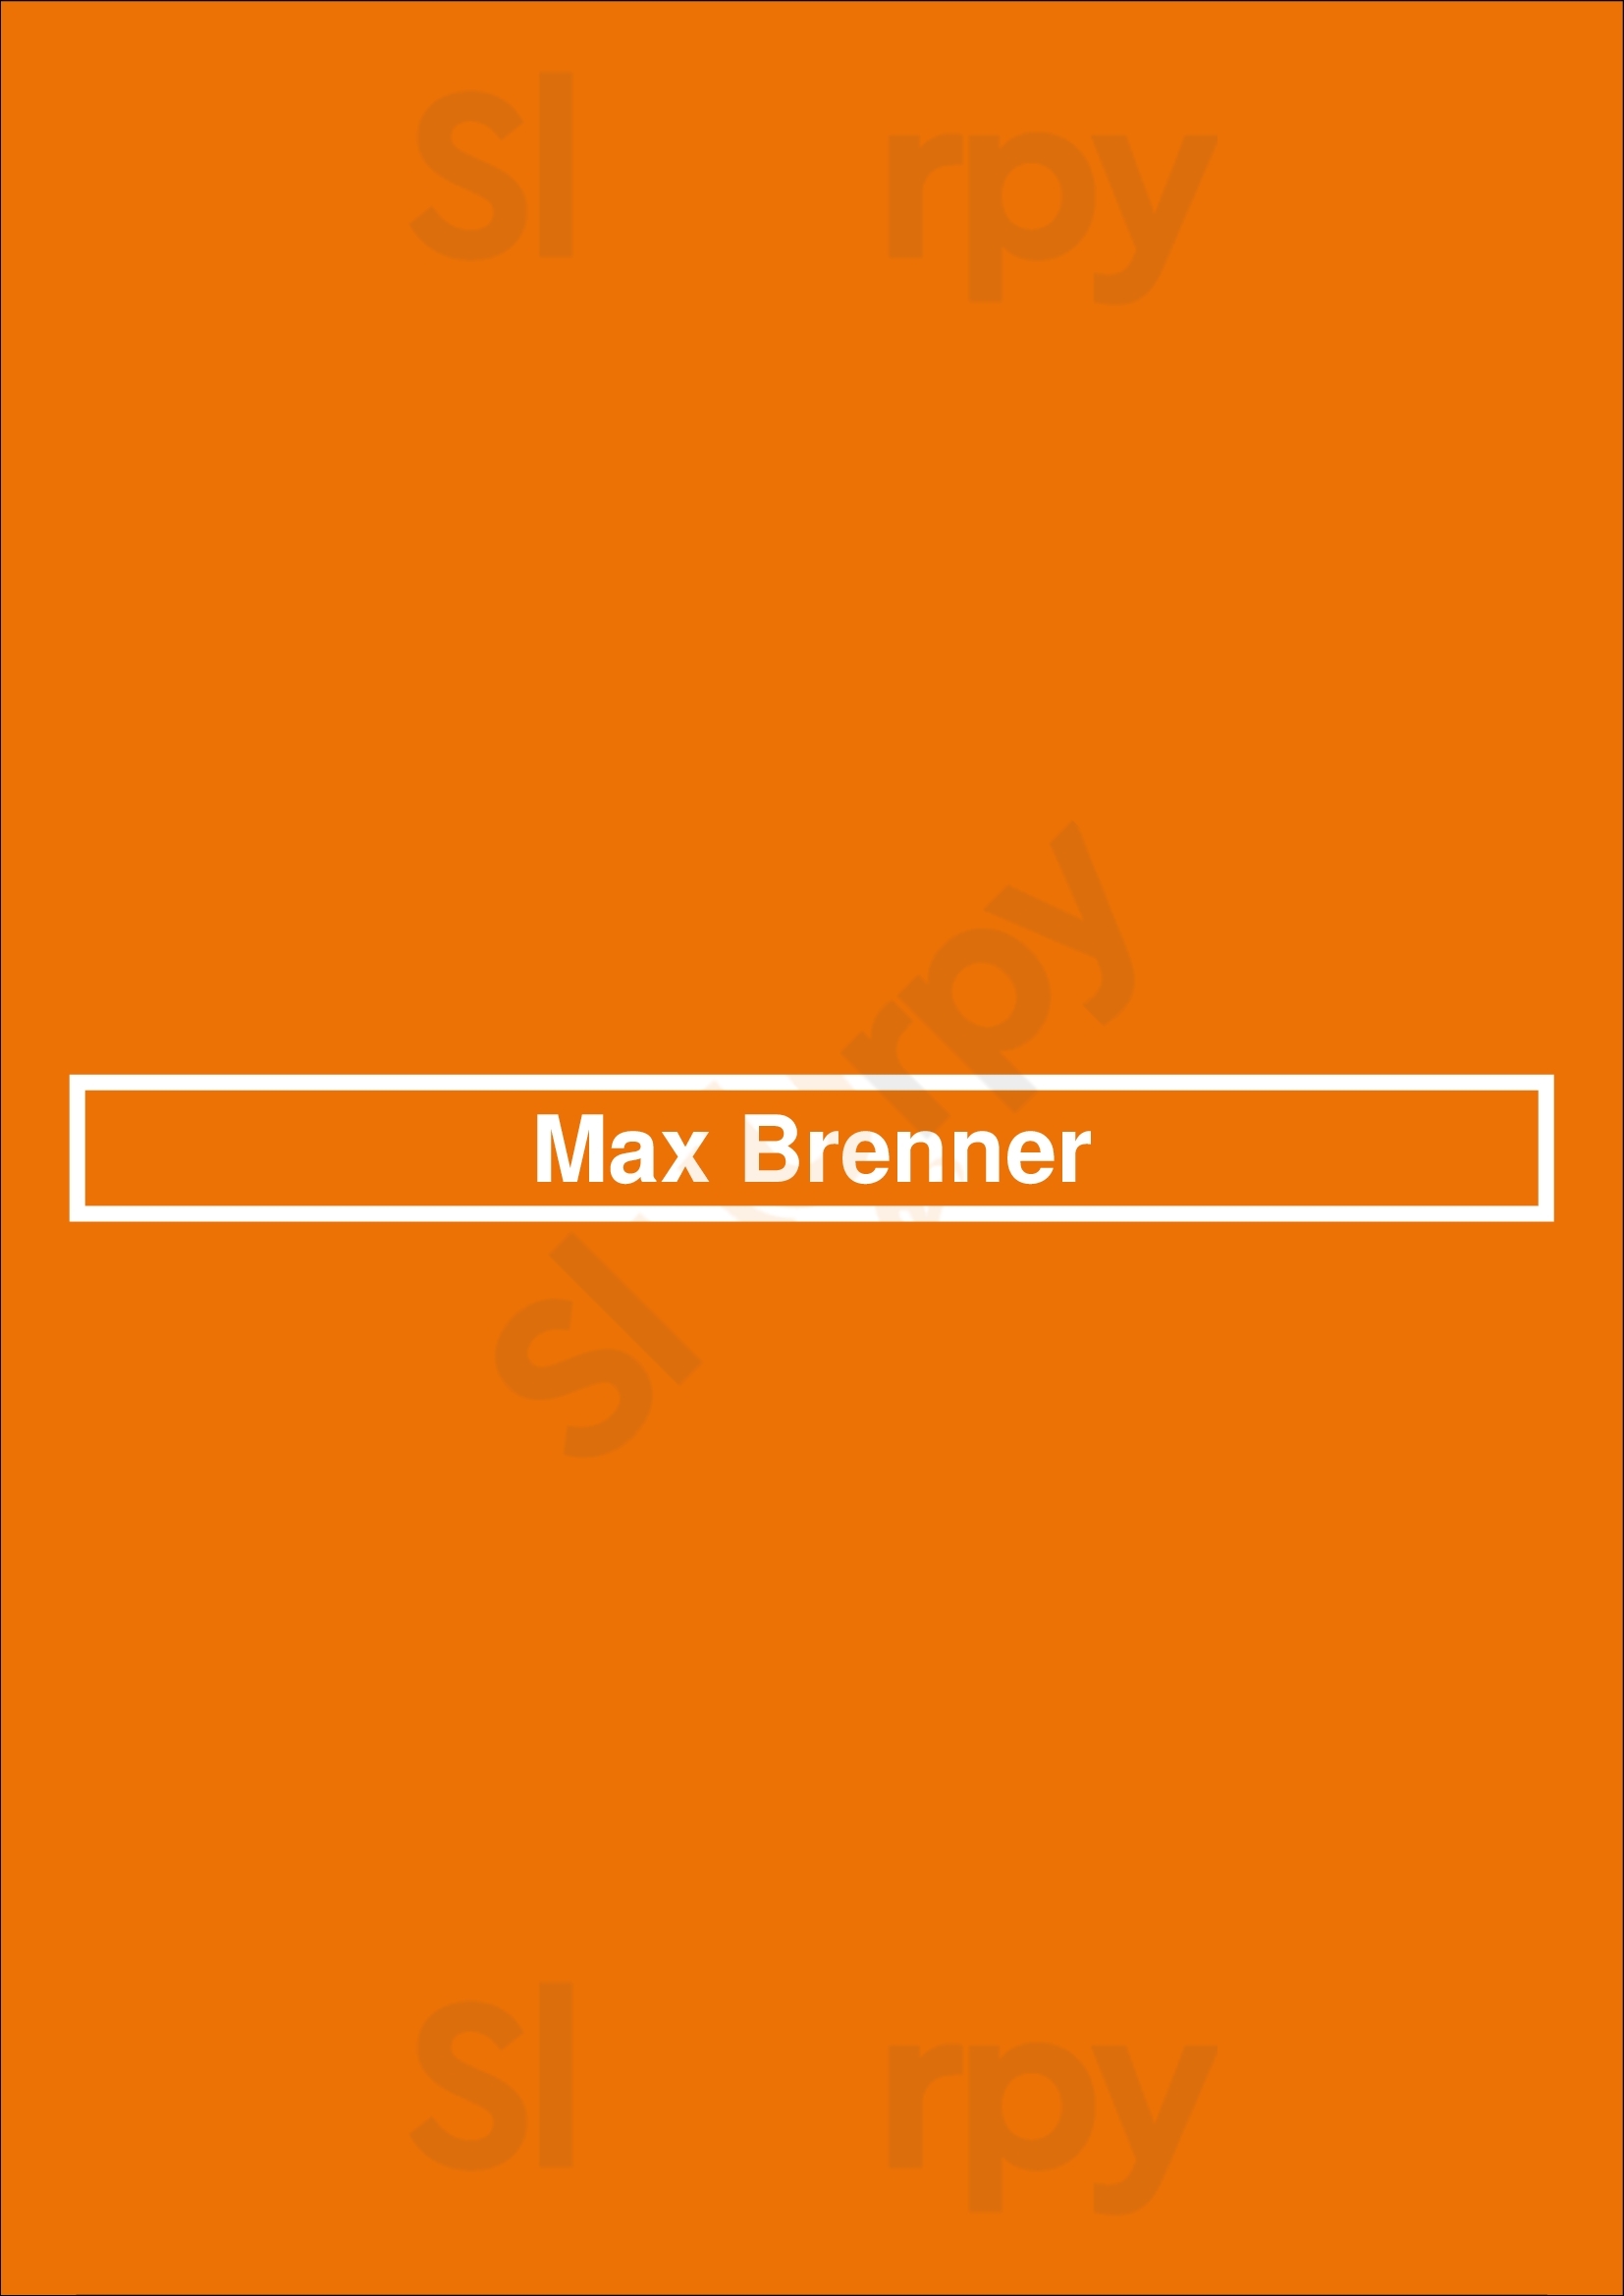 Max Brenner Boston Menu - 1